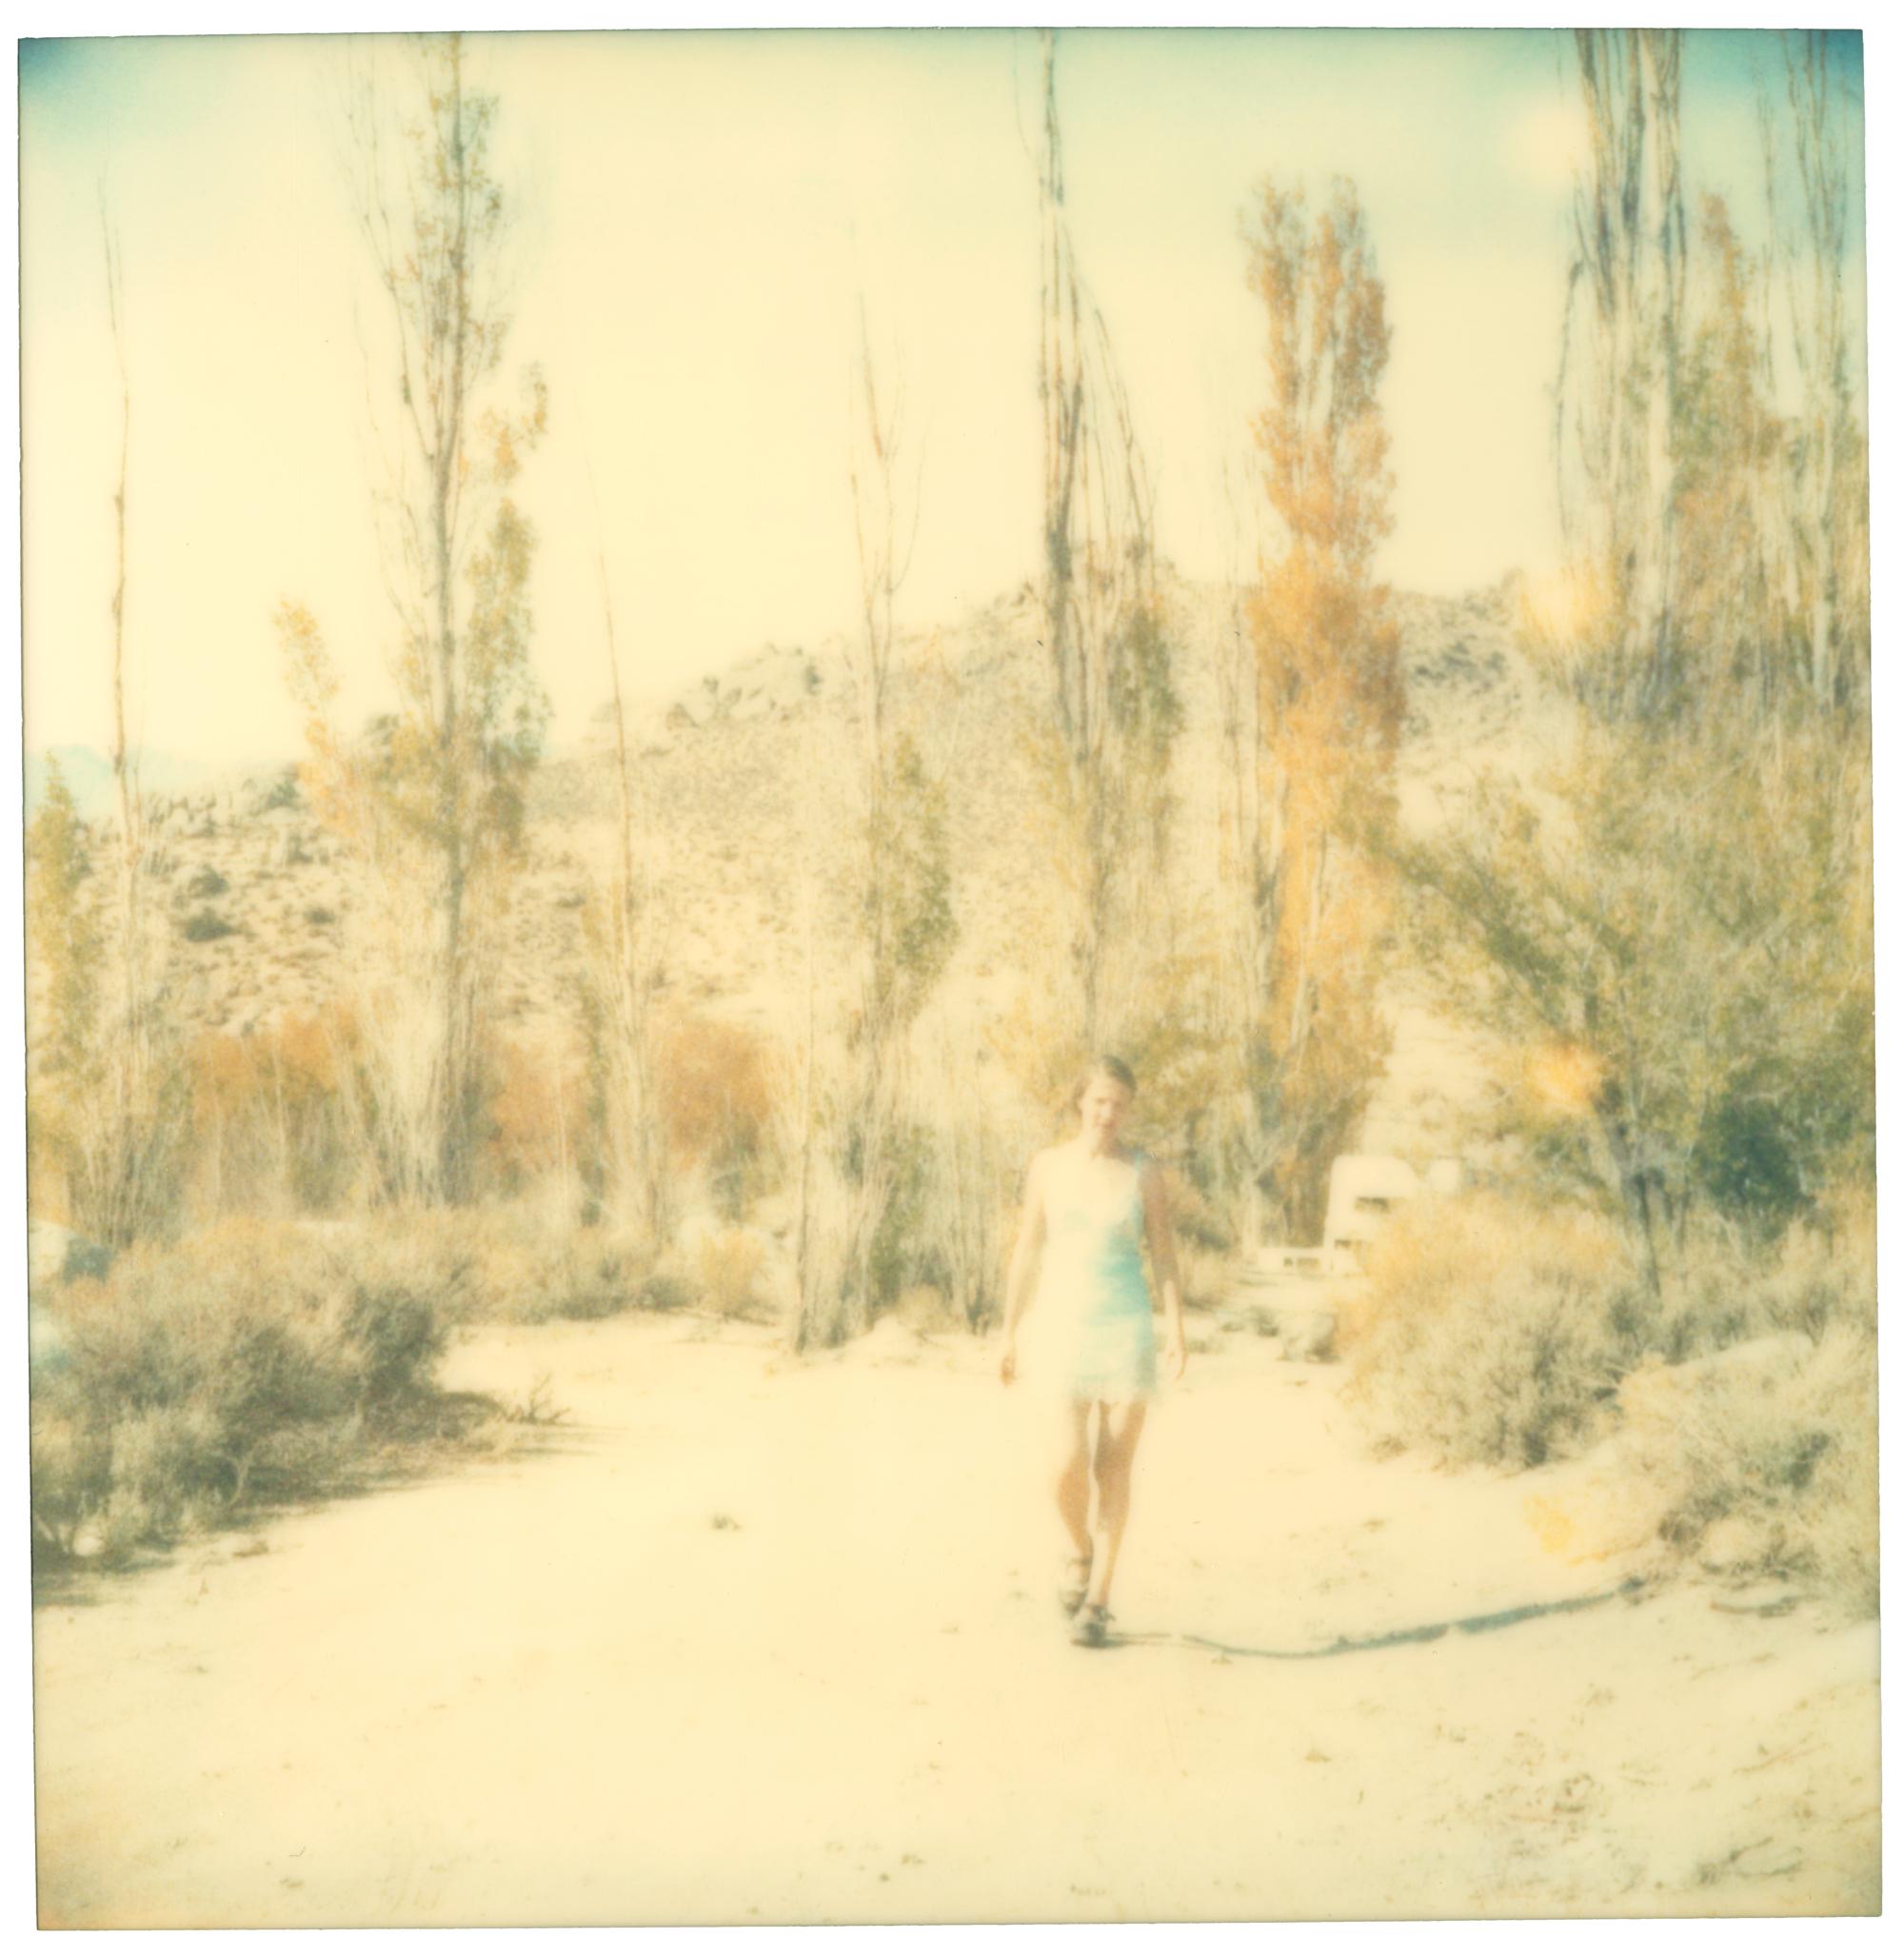 Last Season (Wastelands), diptych - Polaroid, Expired. Contemporary, Color - Photograph by Stefanie Schneider